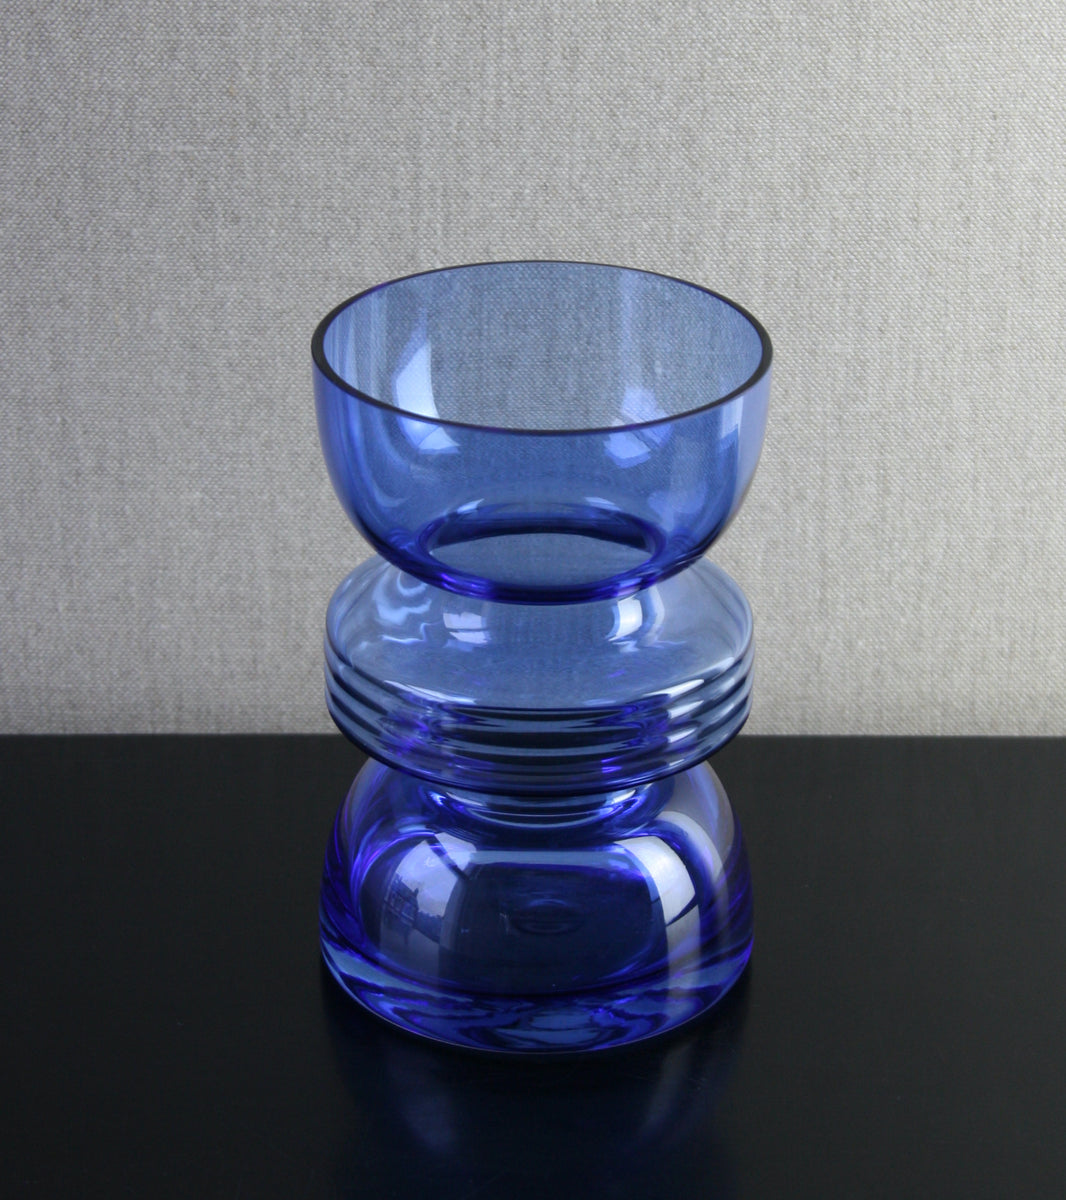 Blue Model 1441 "Tiimalasi" (Hourglass) Vase / Nanny Still, 1970